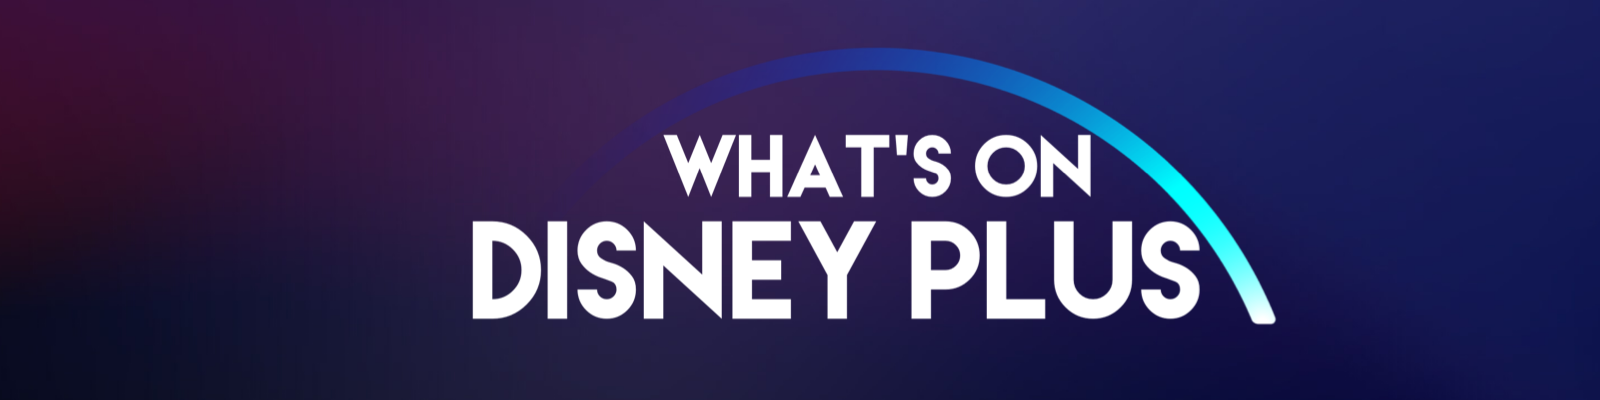 What’s On Disney Plus Podcast